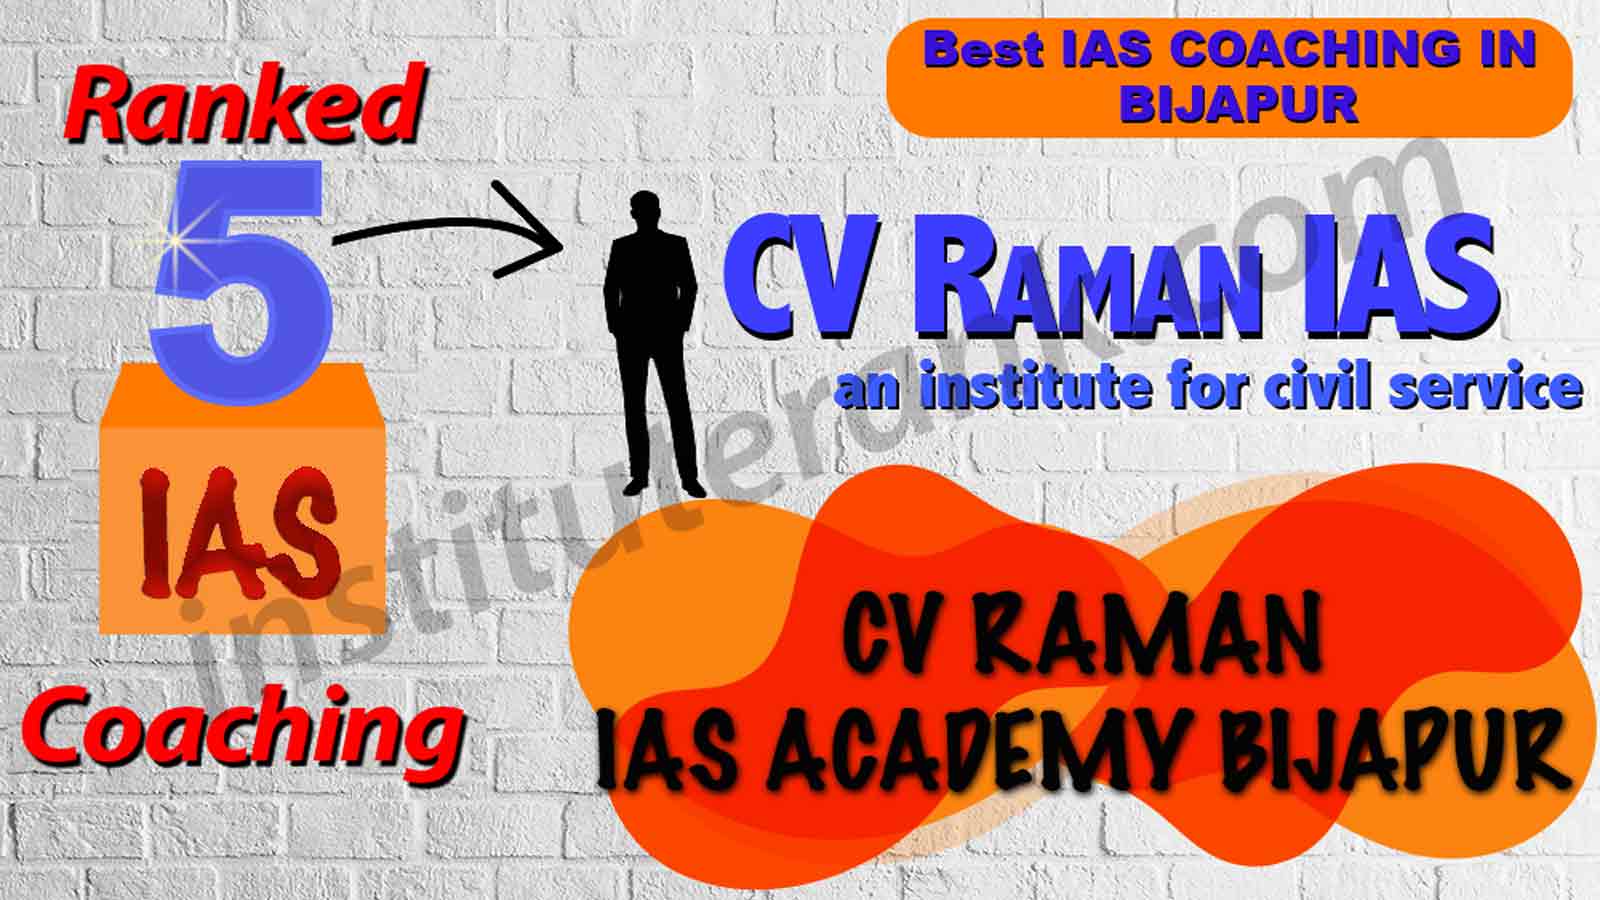 Best IAS Coaching in Bijapur